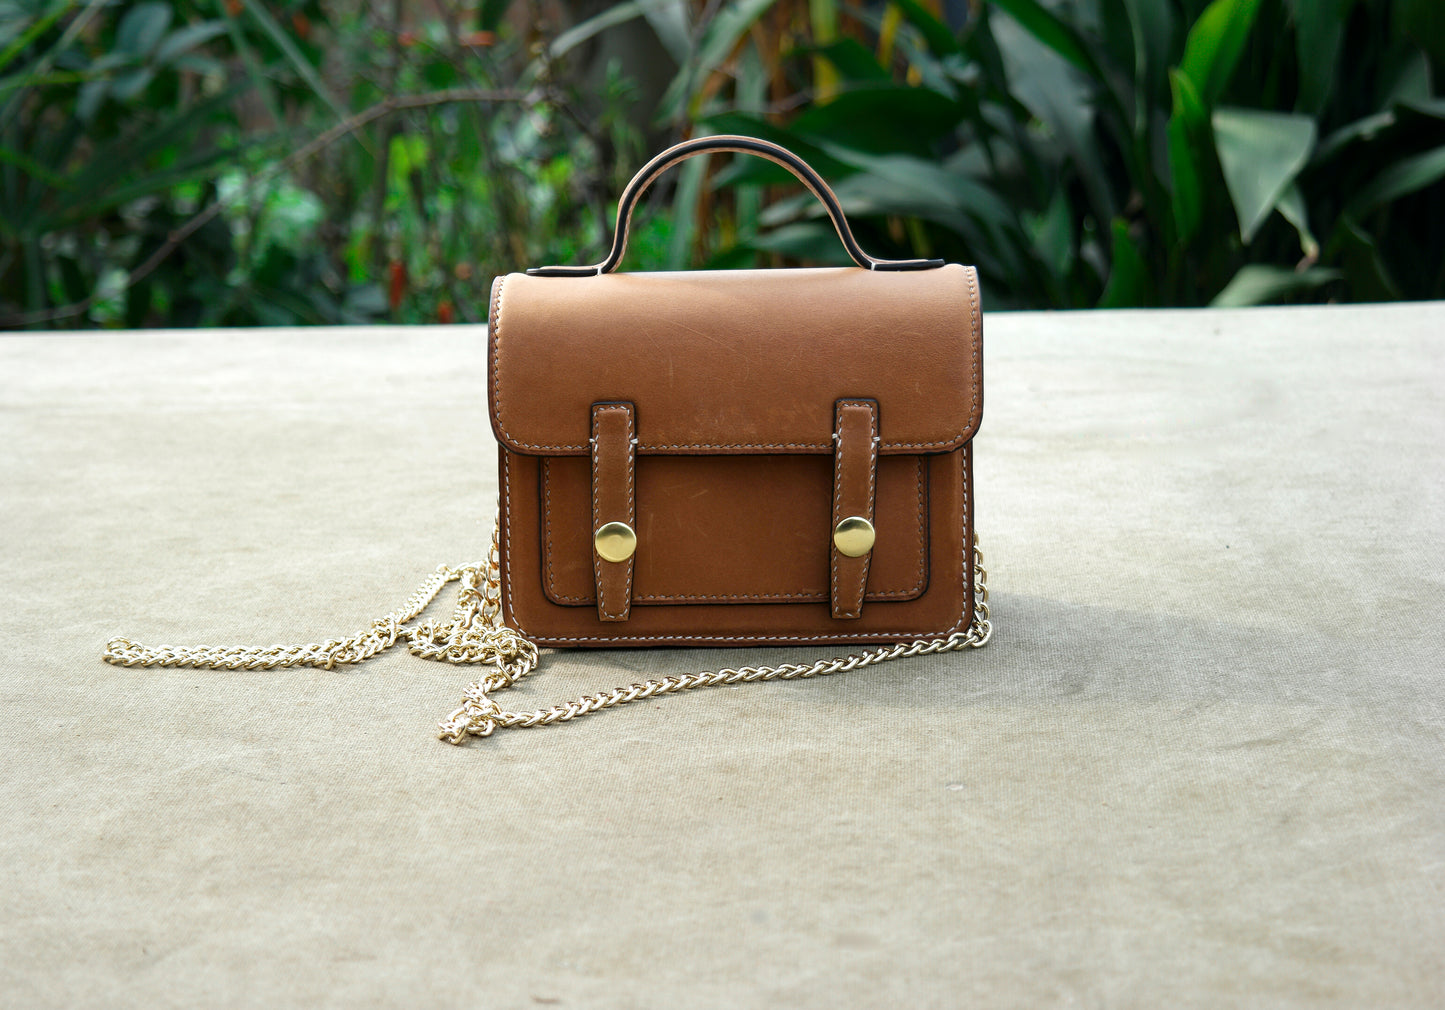 Mini messenger bag,Carry a handbag,leather handbags